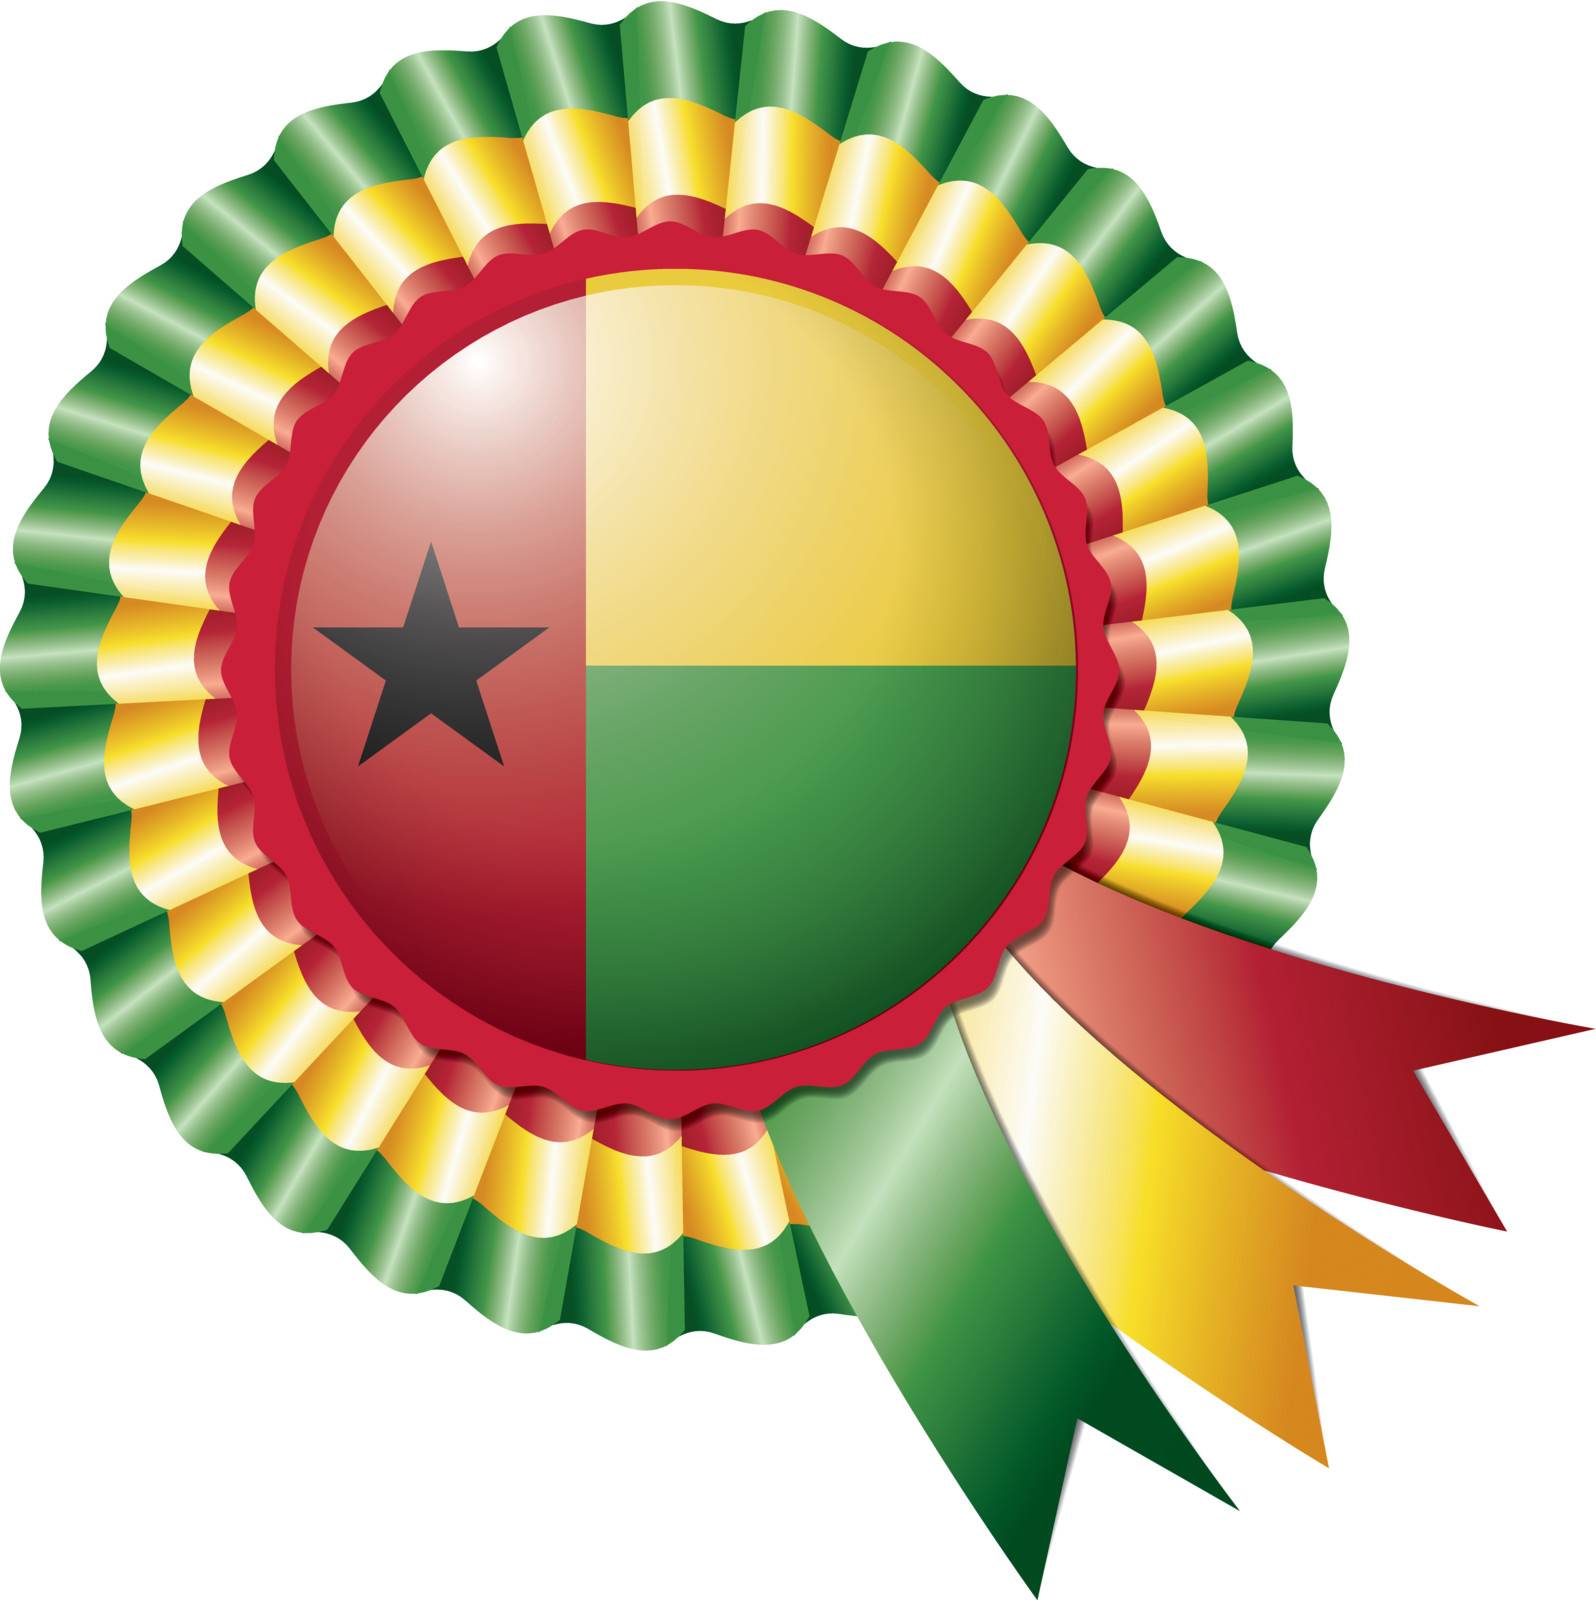 Guinea bissau rosette flag by milinz